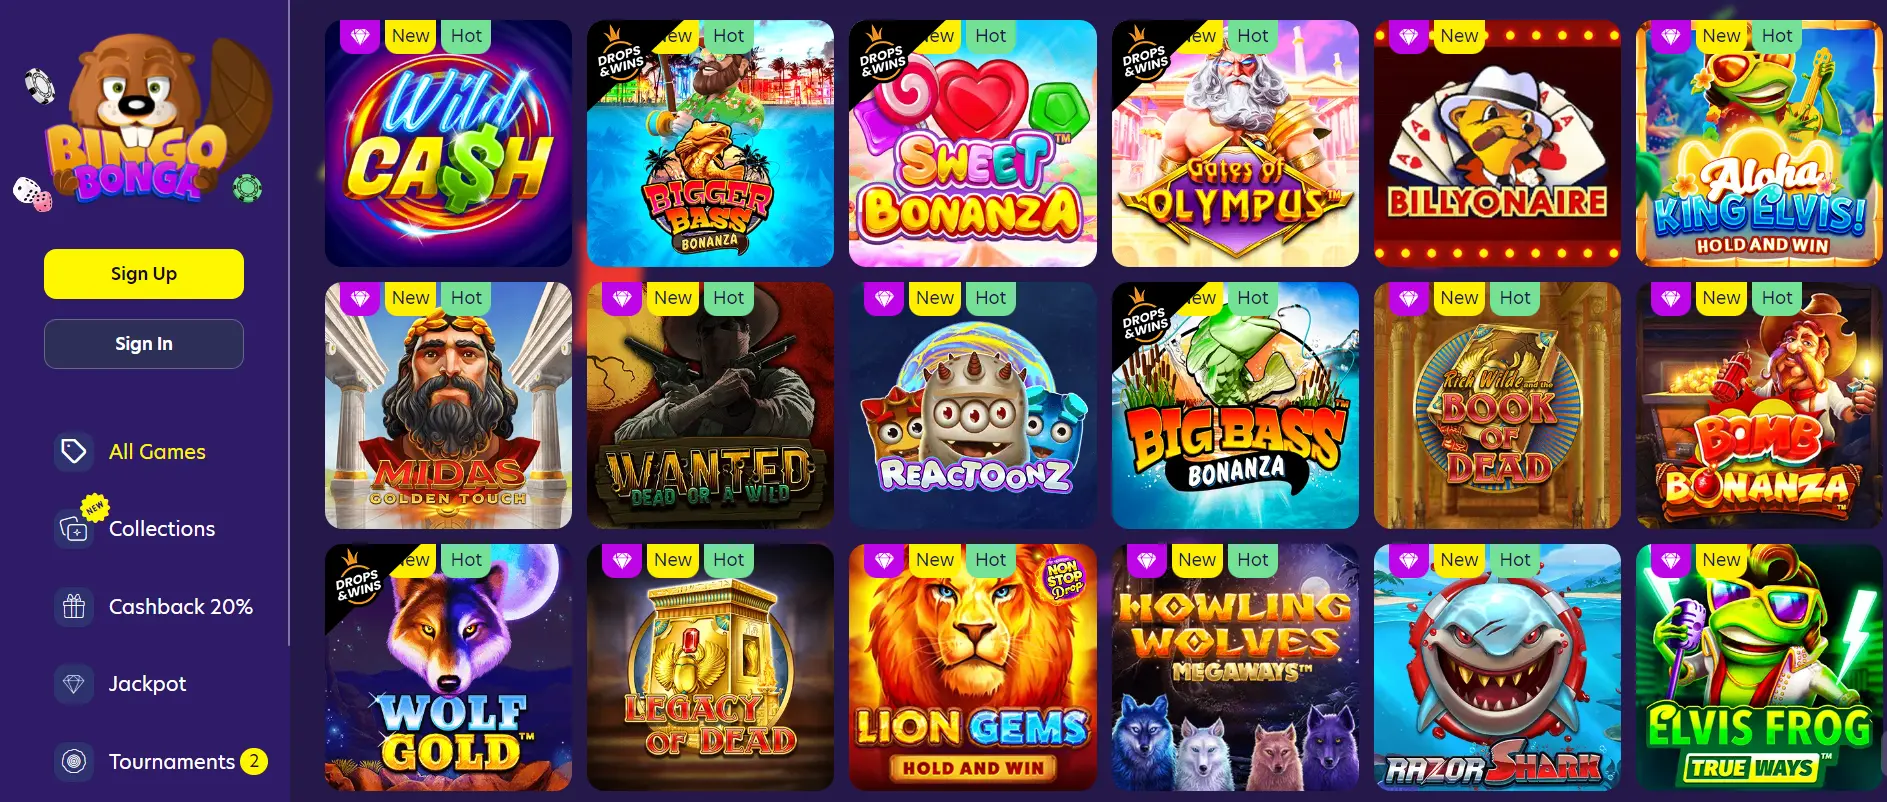 BingoBonga Casino Games - Screenshot from Oficial Website